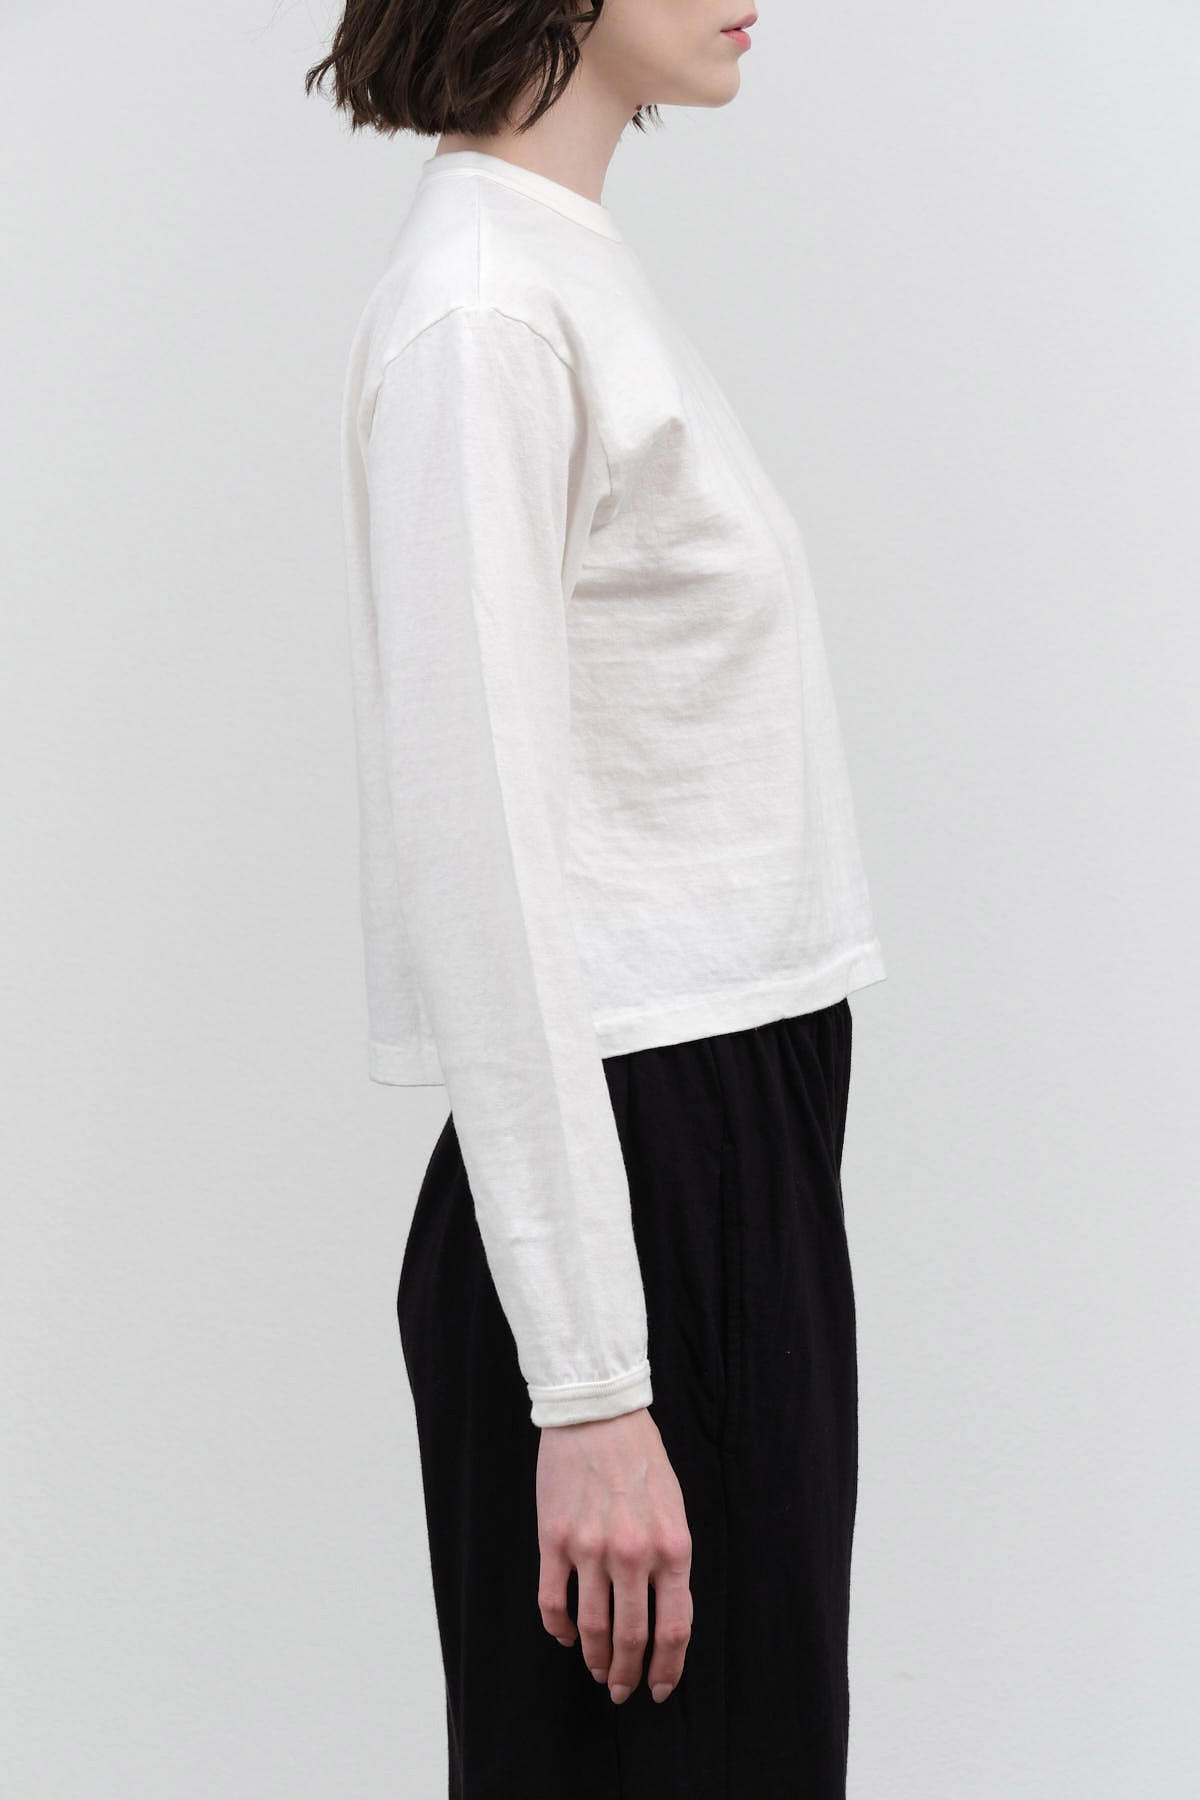 White Hi'aka Long Sleeve T-Shirt by Sunray Sportswear